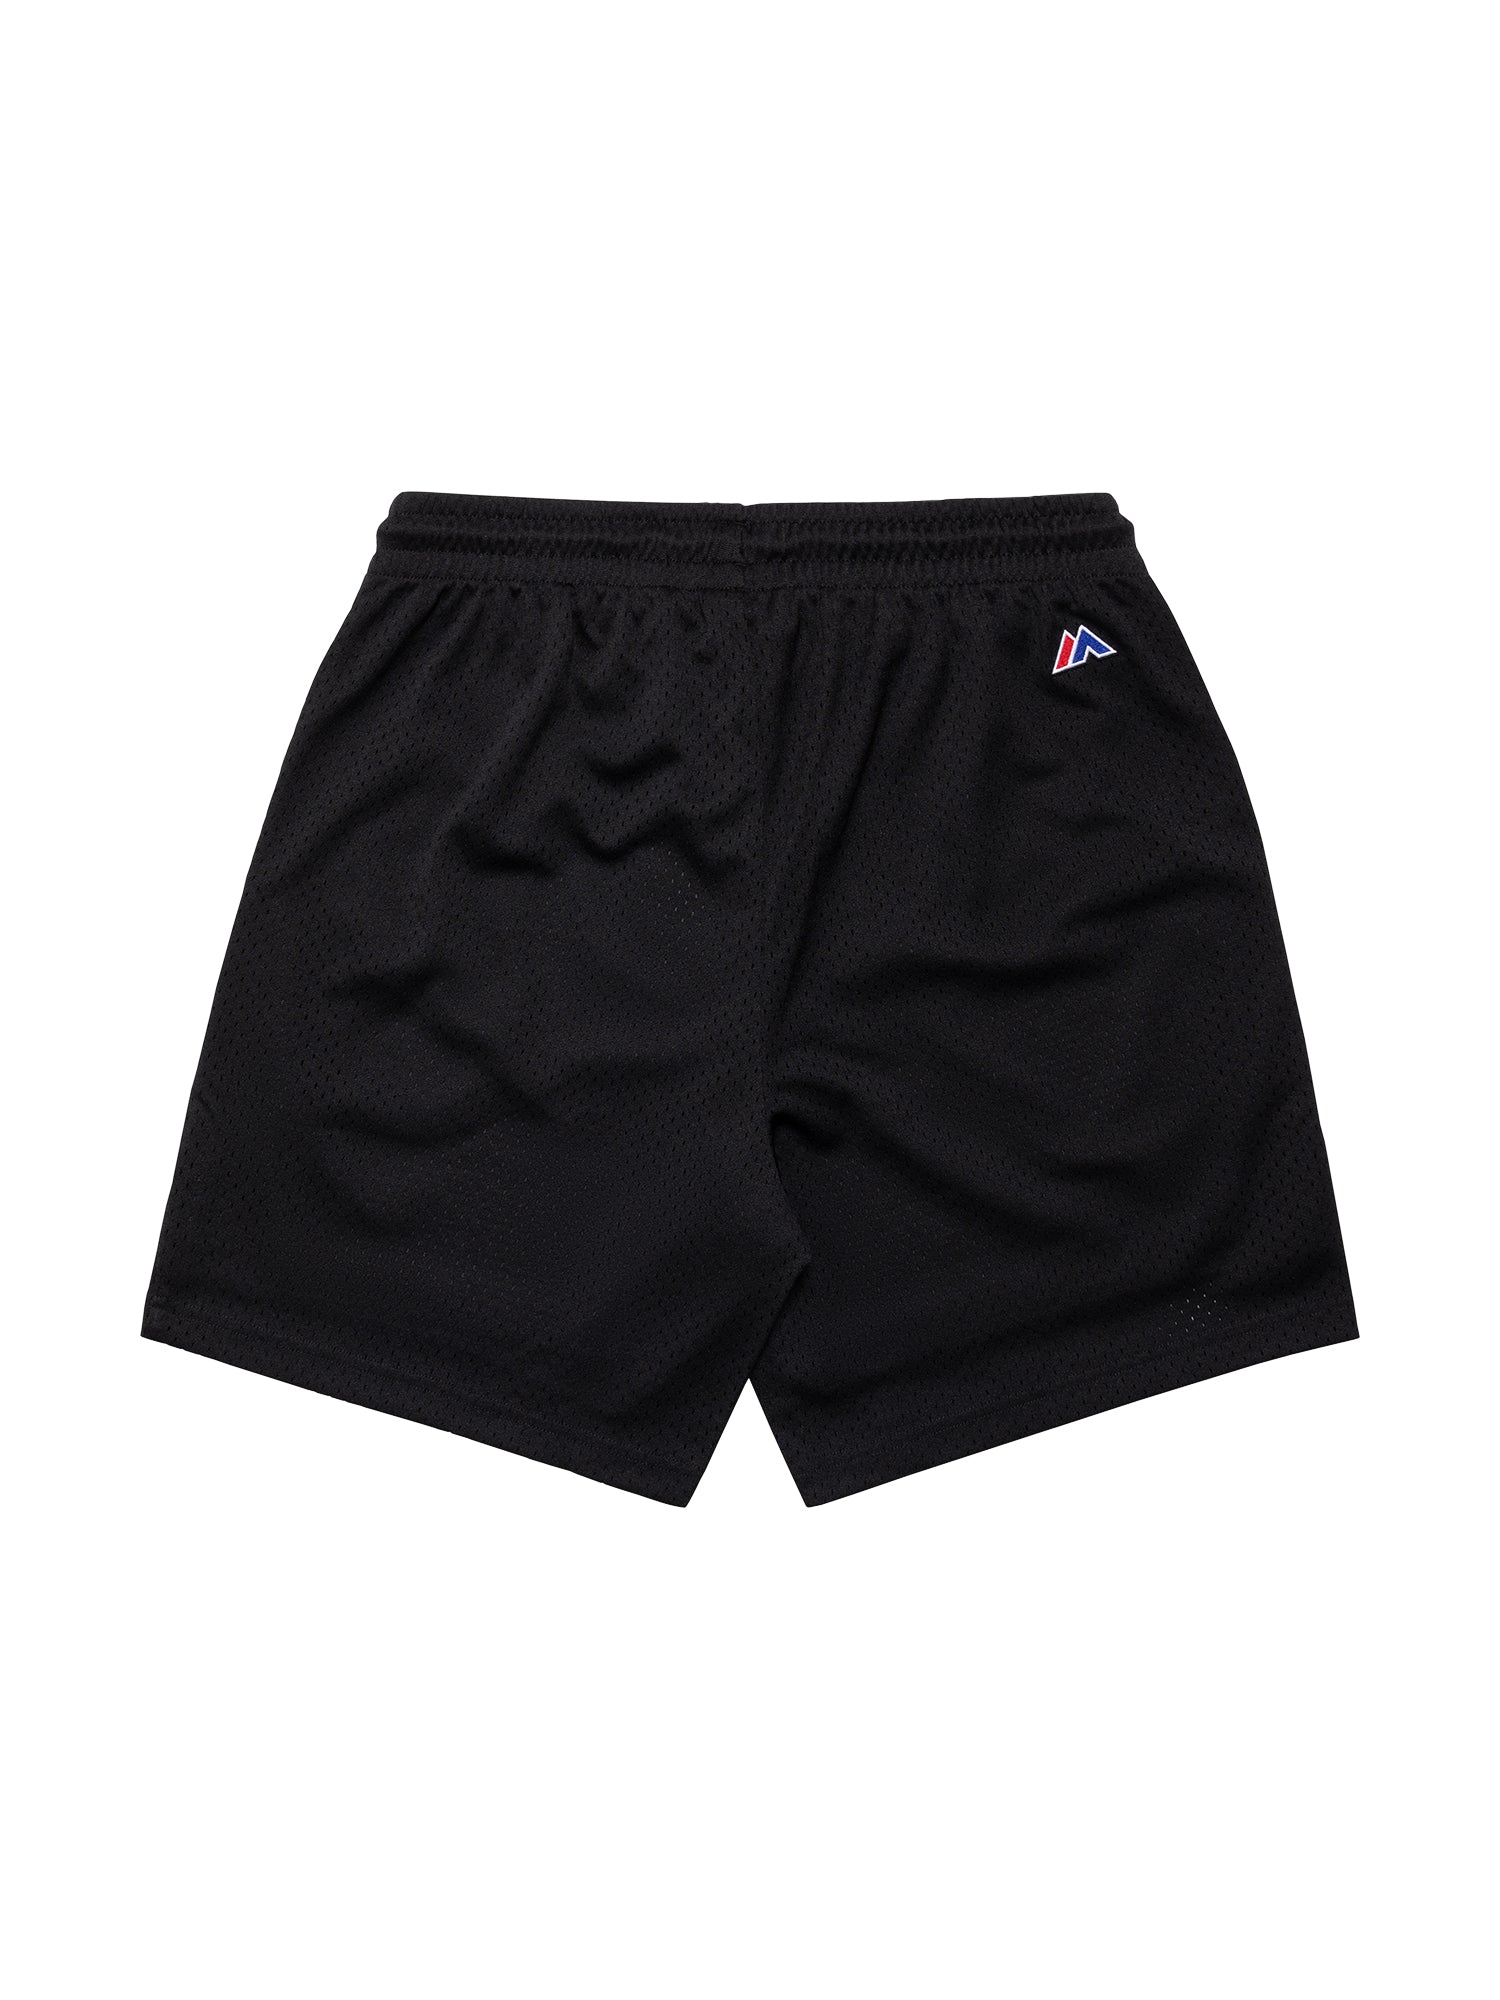 MJA-I11 (Majestic vintage sport mesh shorts raiders faded black) 72394782 MAJESTIC